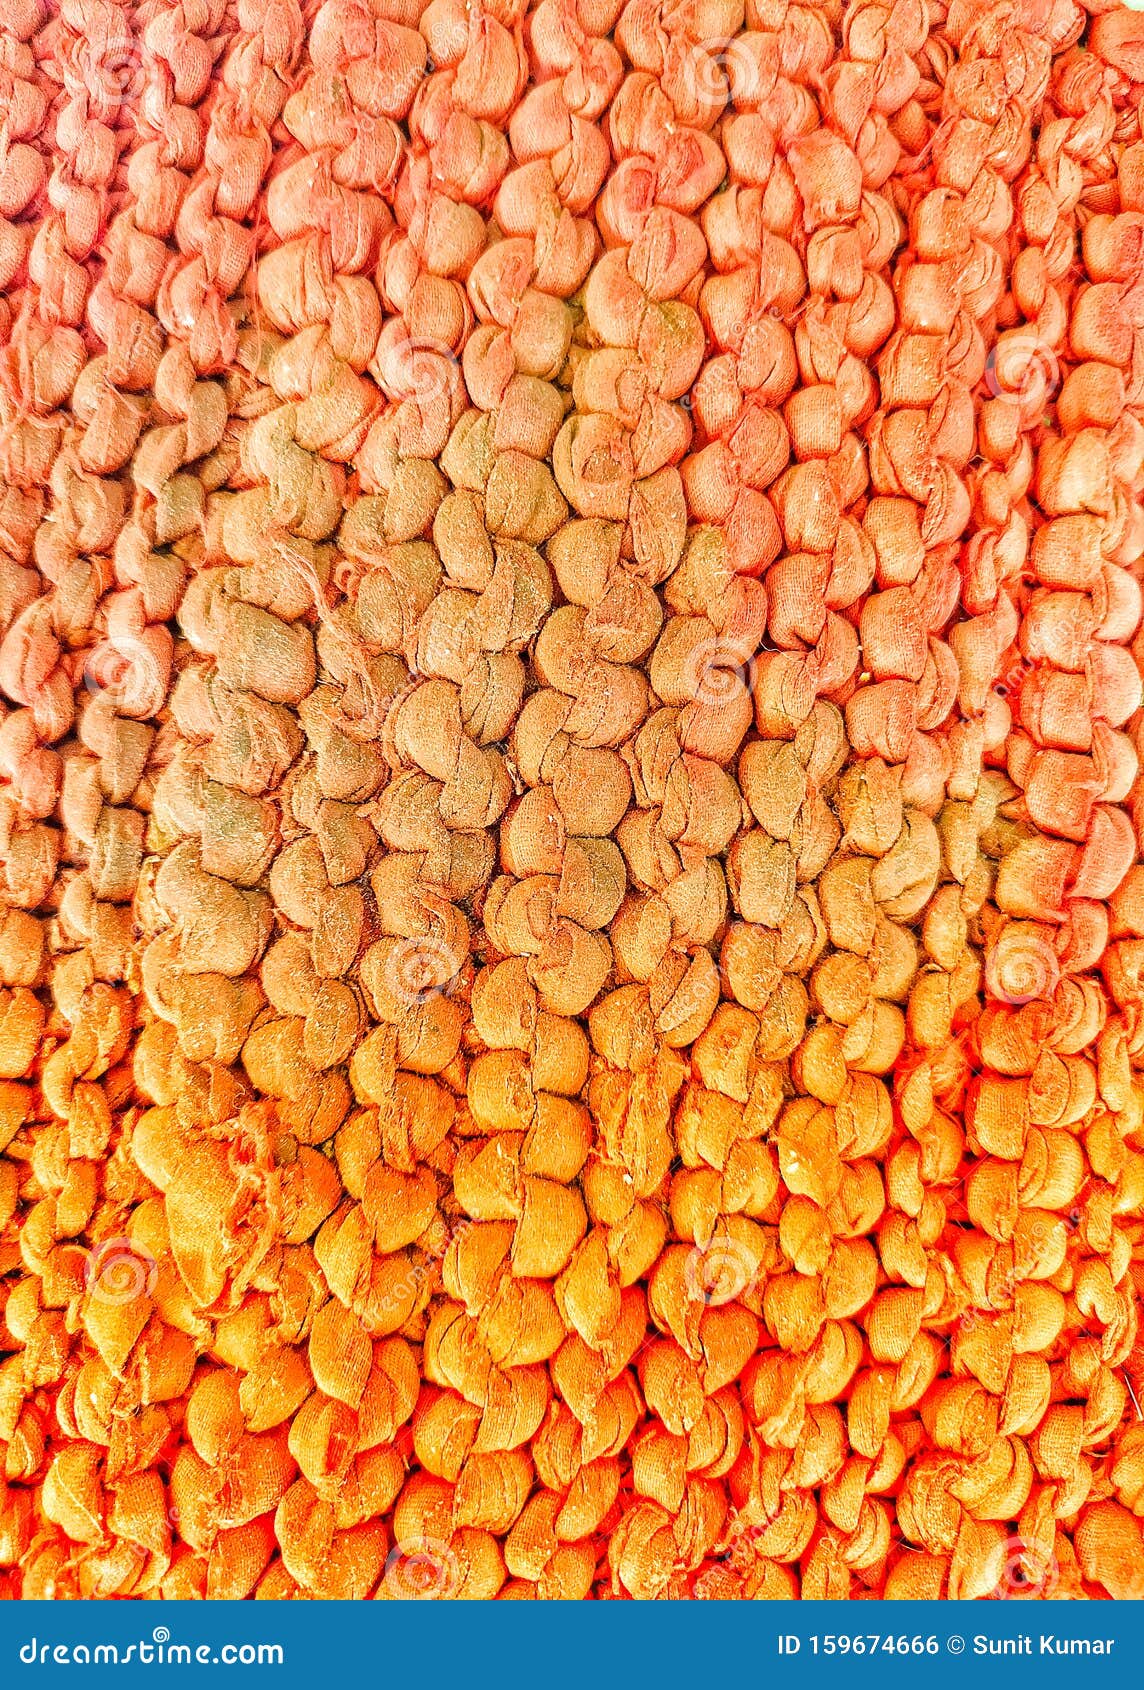 Very Beautiful Indian Knitting HD Wallpaper. Stock Photo - Image of garden,  light: 159674666